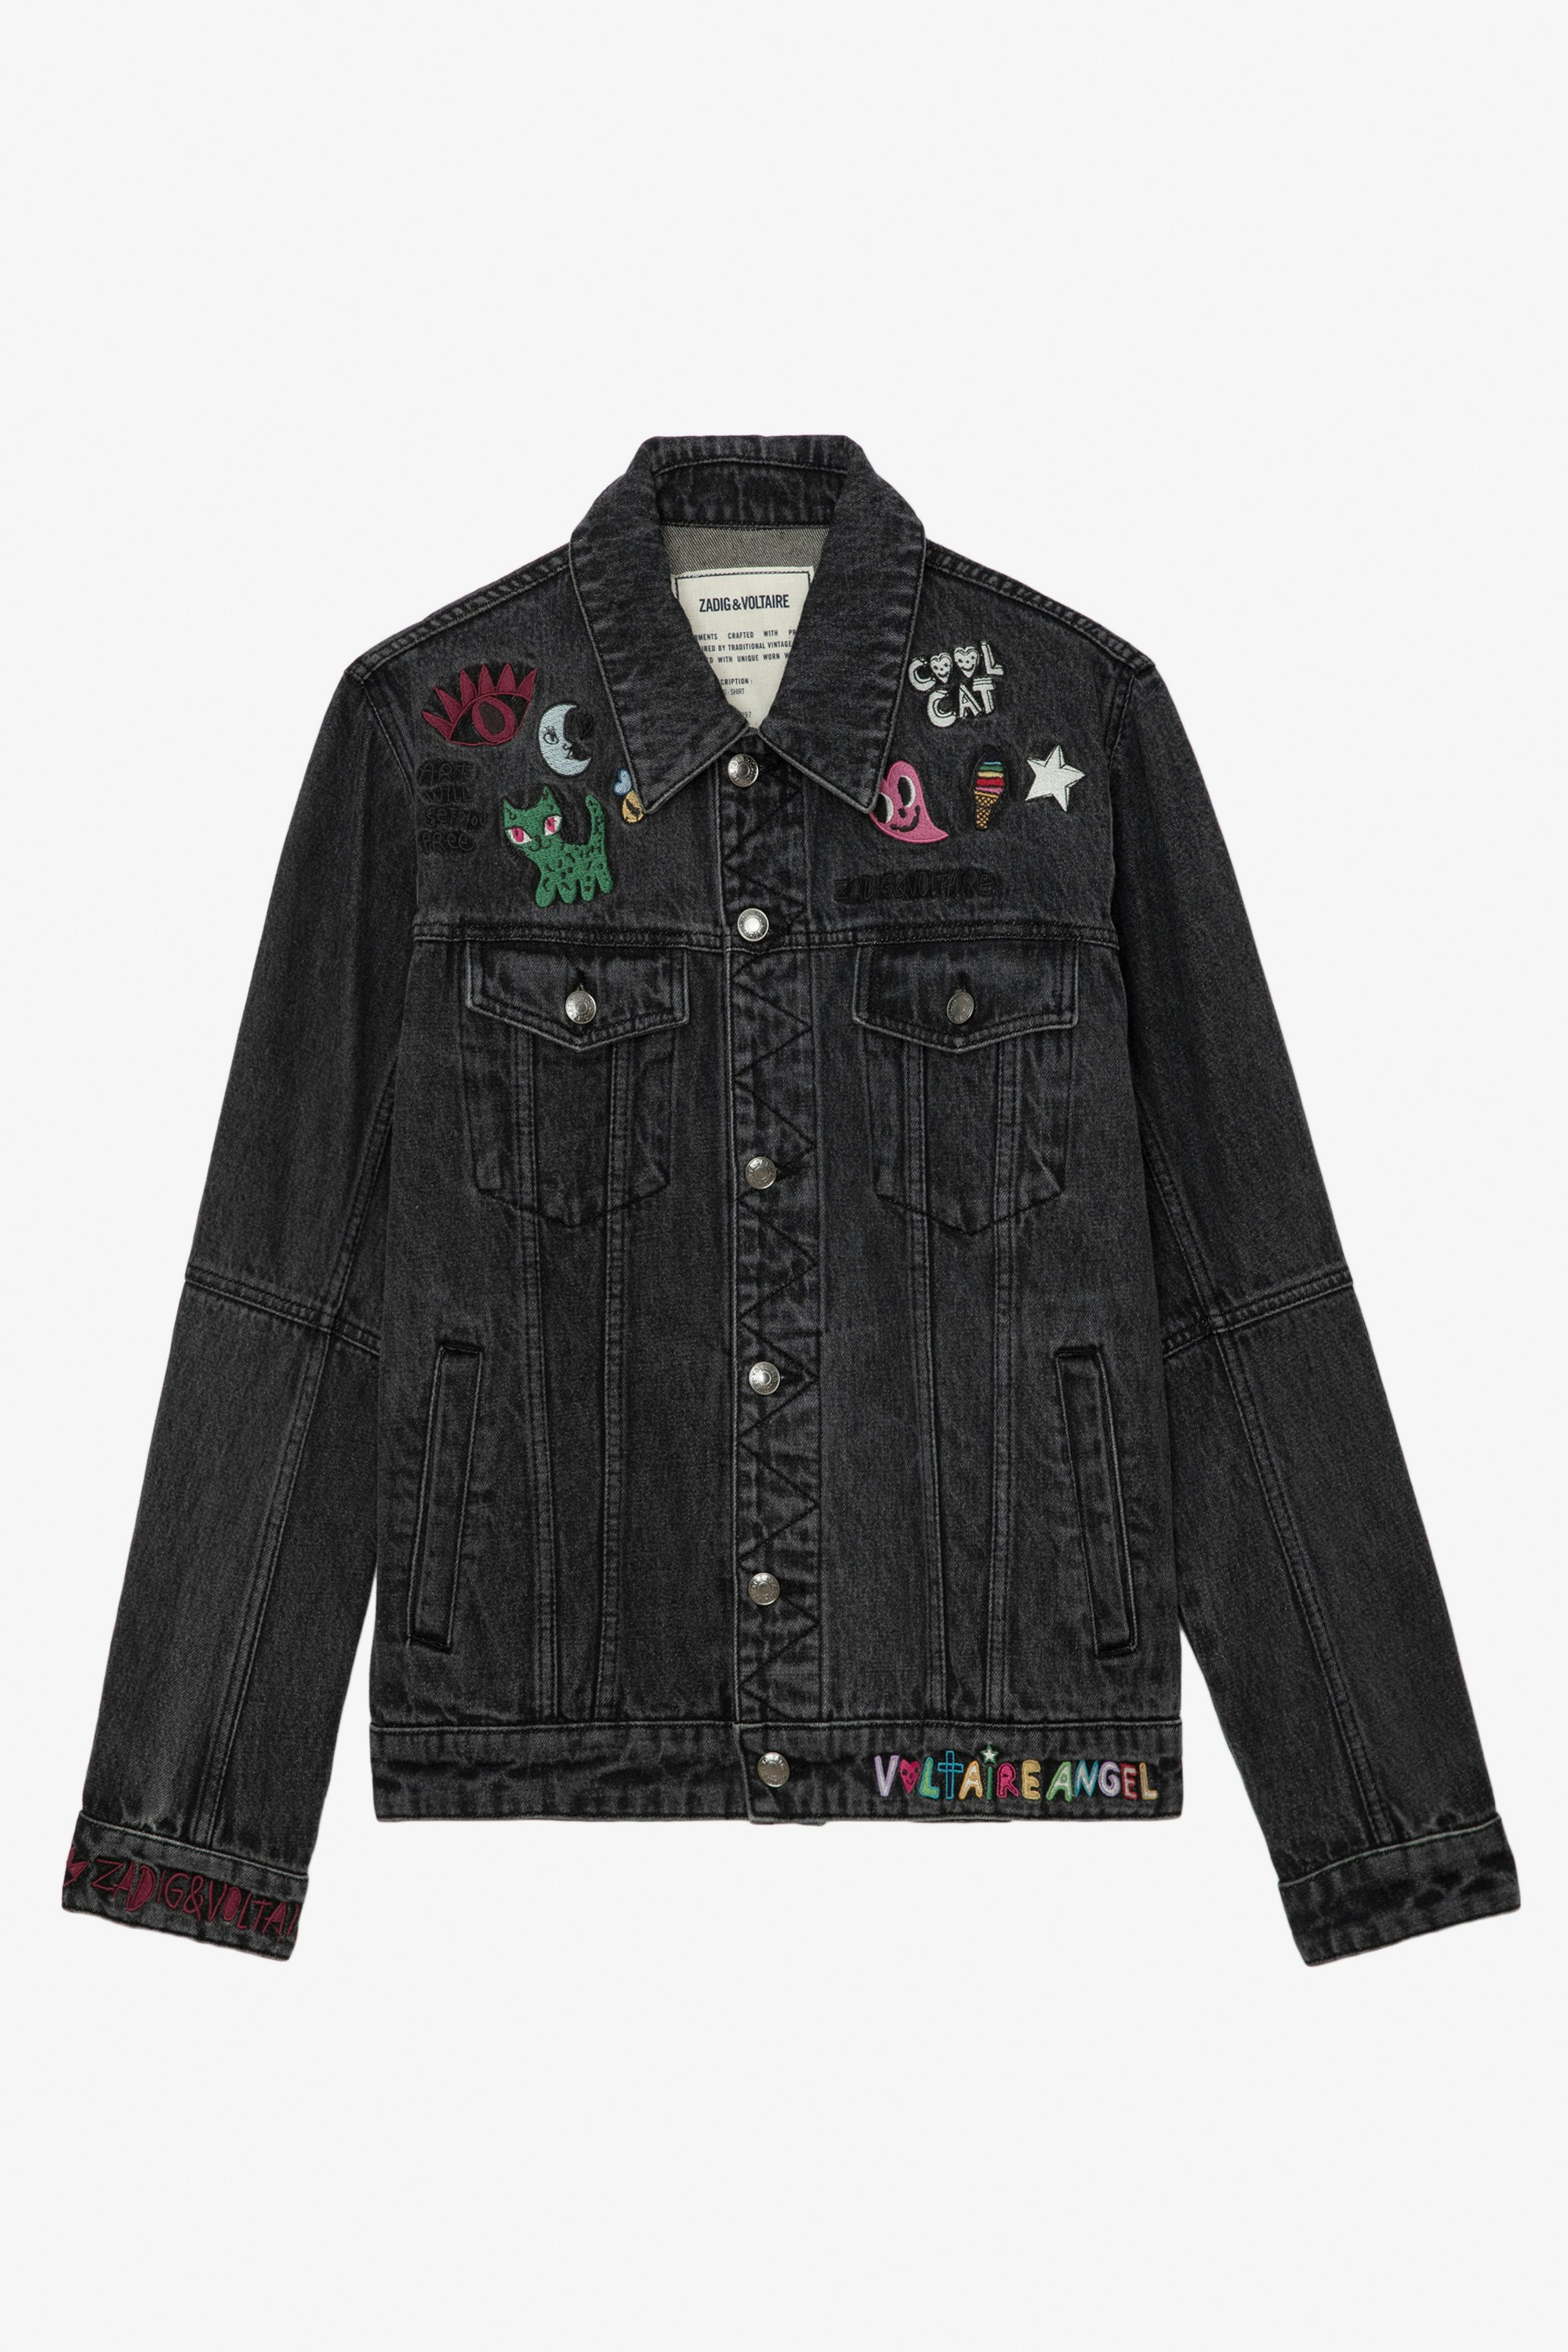 Kasy Denim Jacket - Grey denim oversized jacket with embroidered motifs, overstitching and customised details designed by Humberto Cruz.